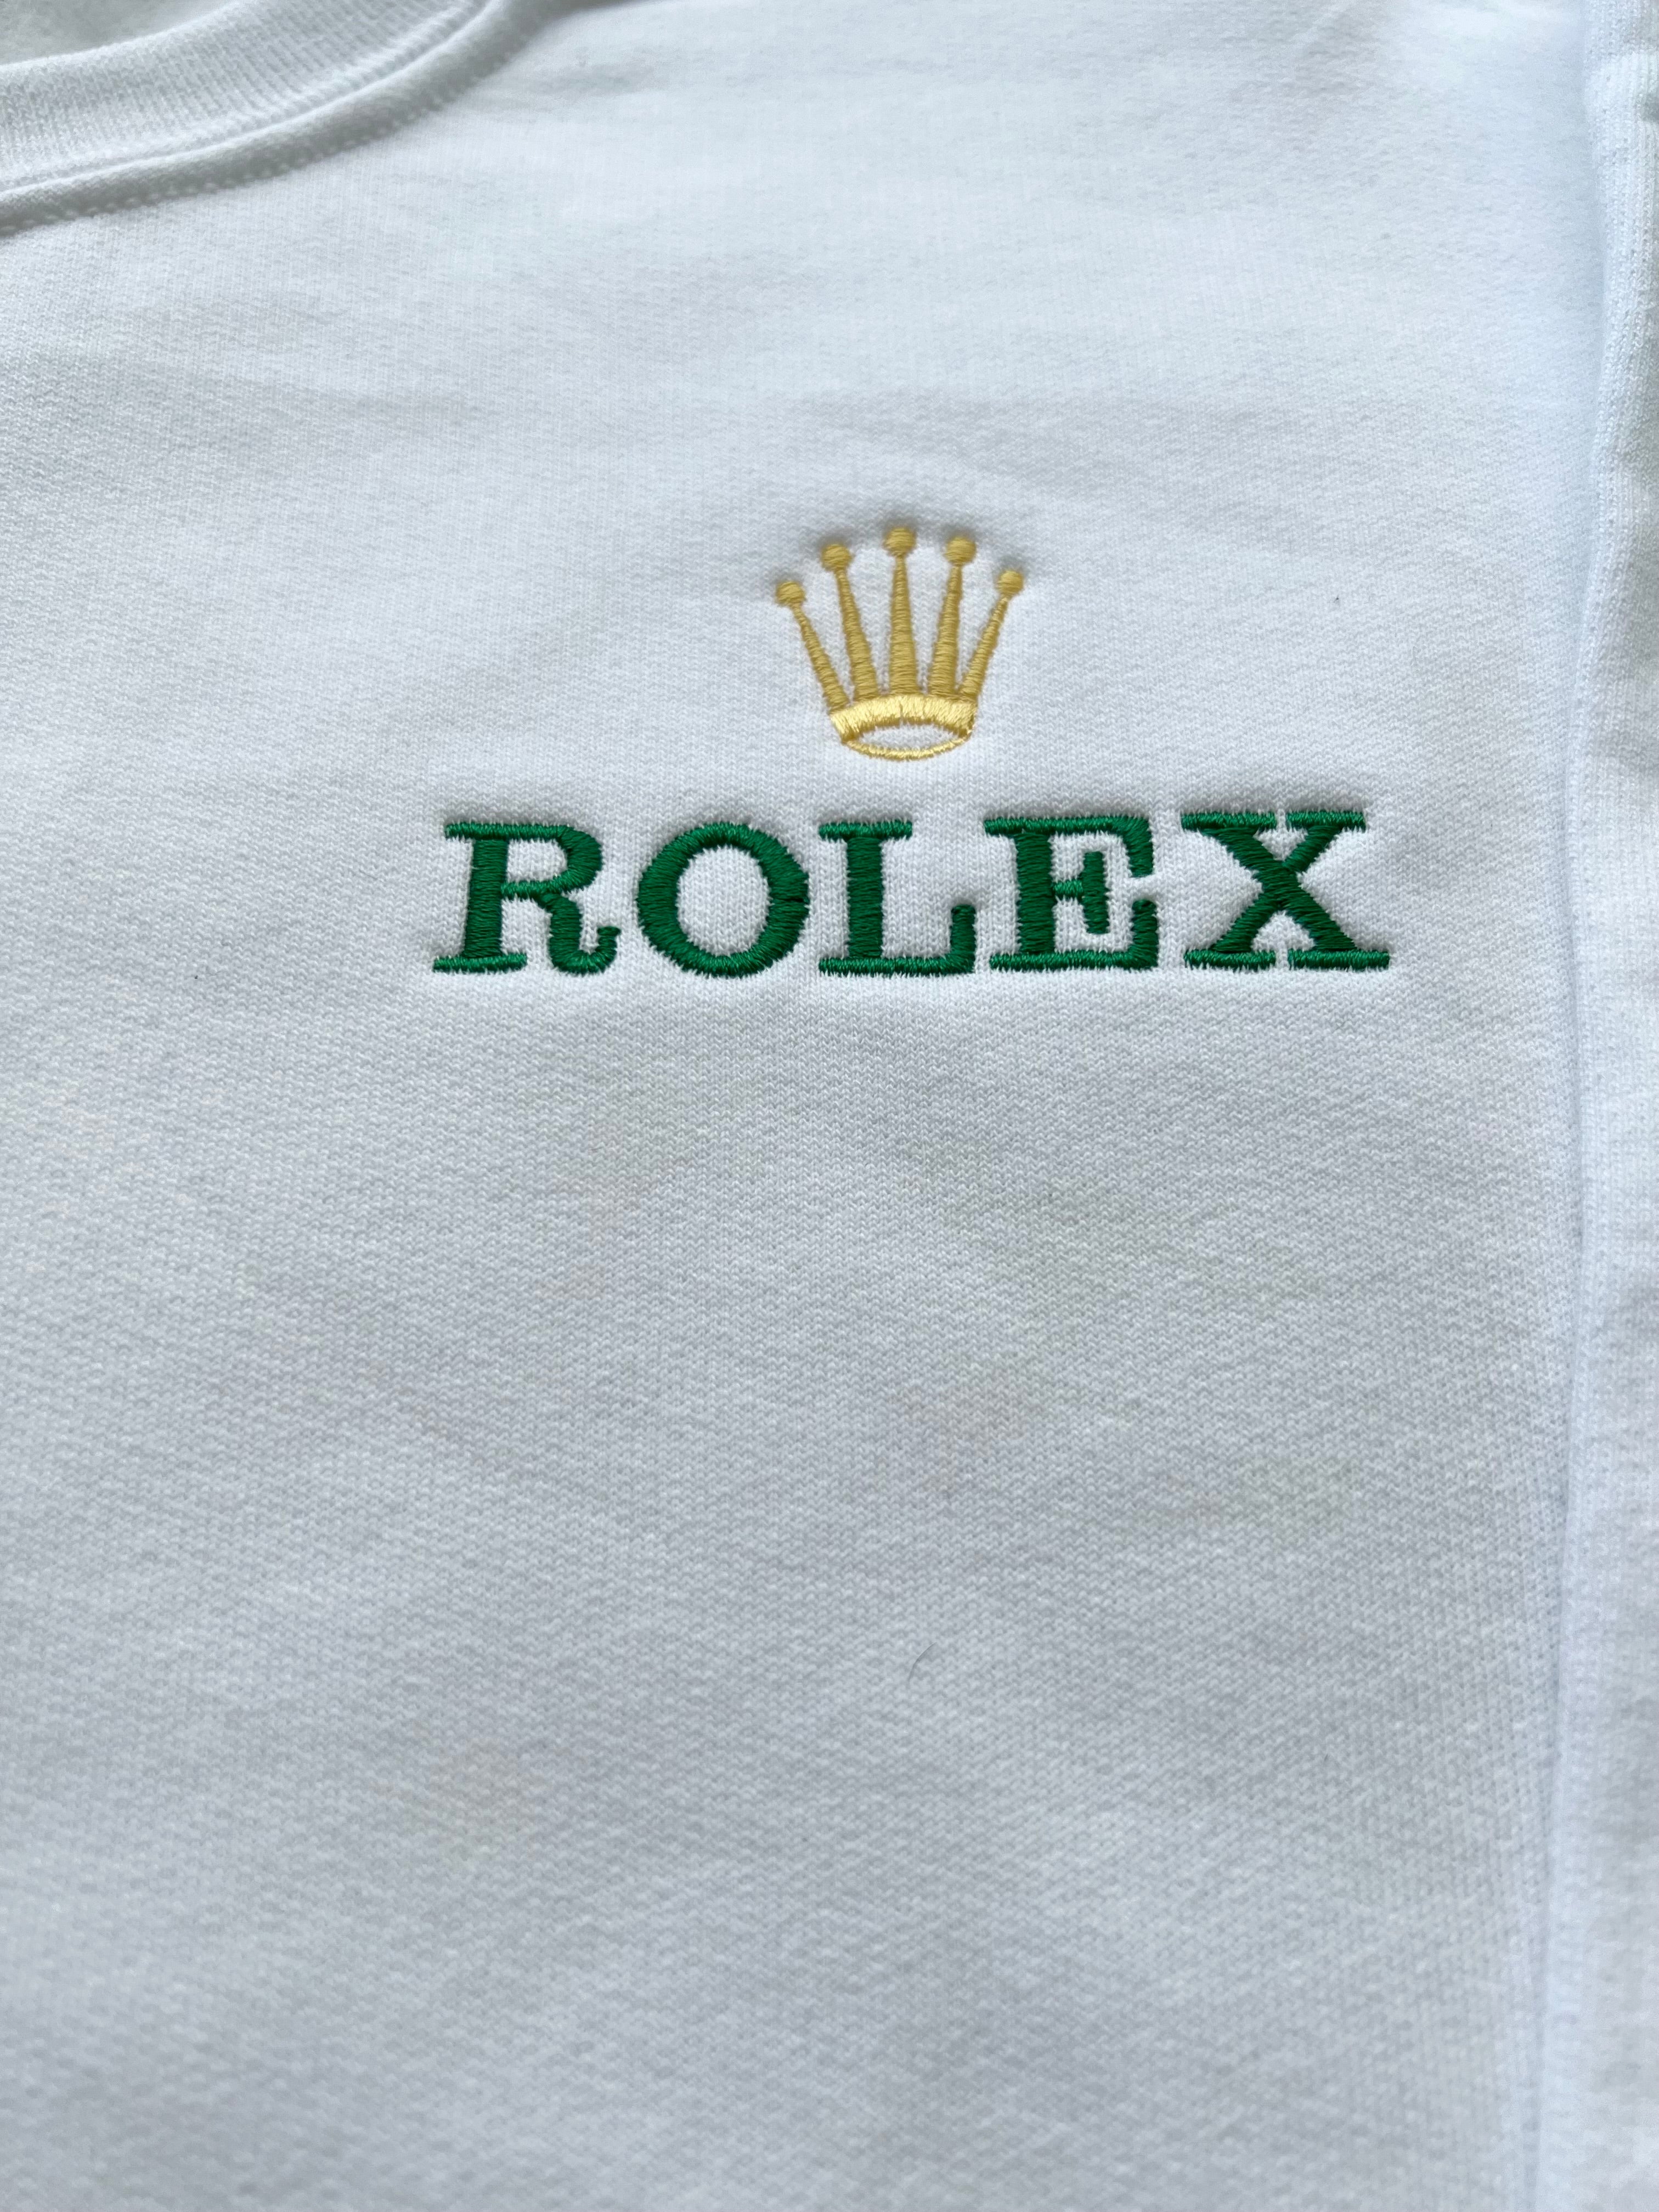 rolex sweatshirt embroidery